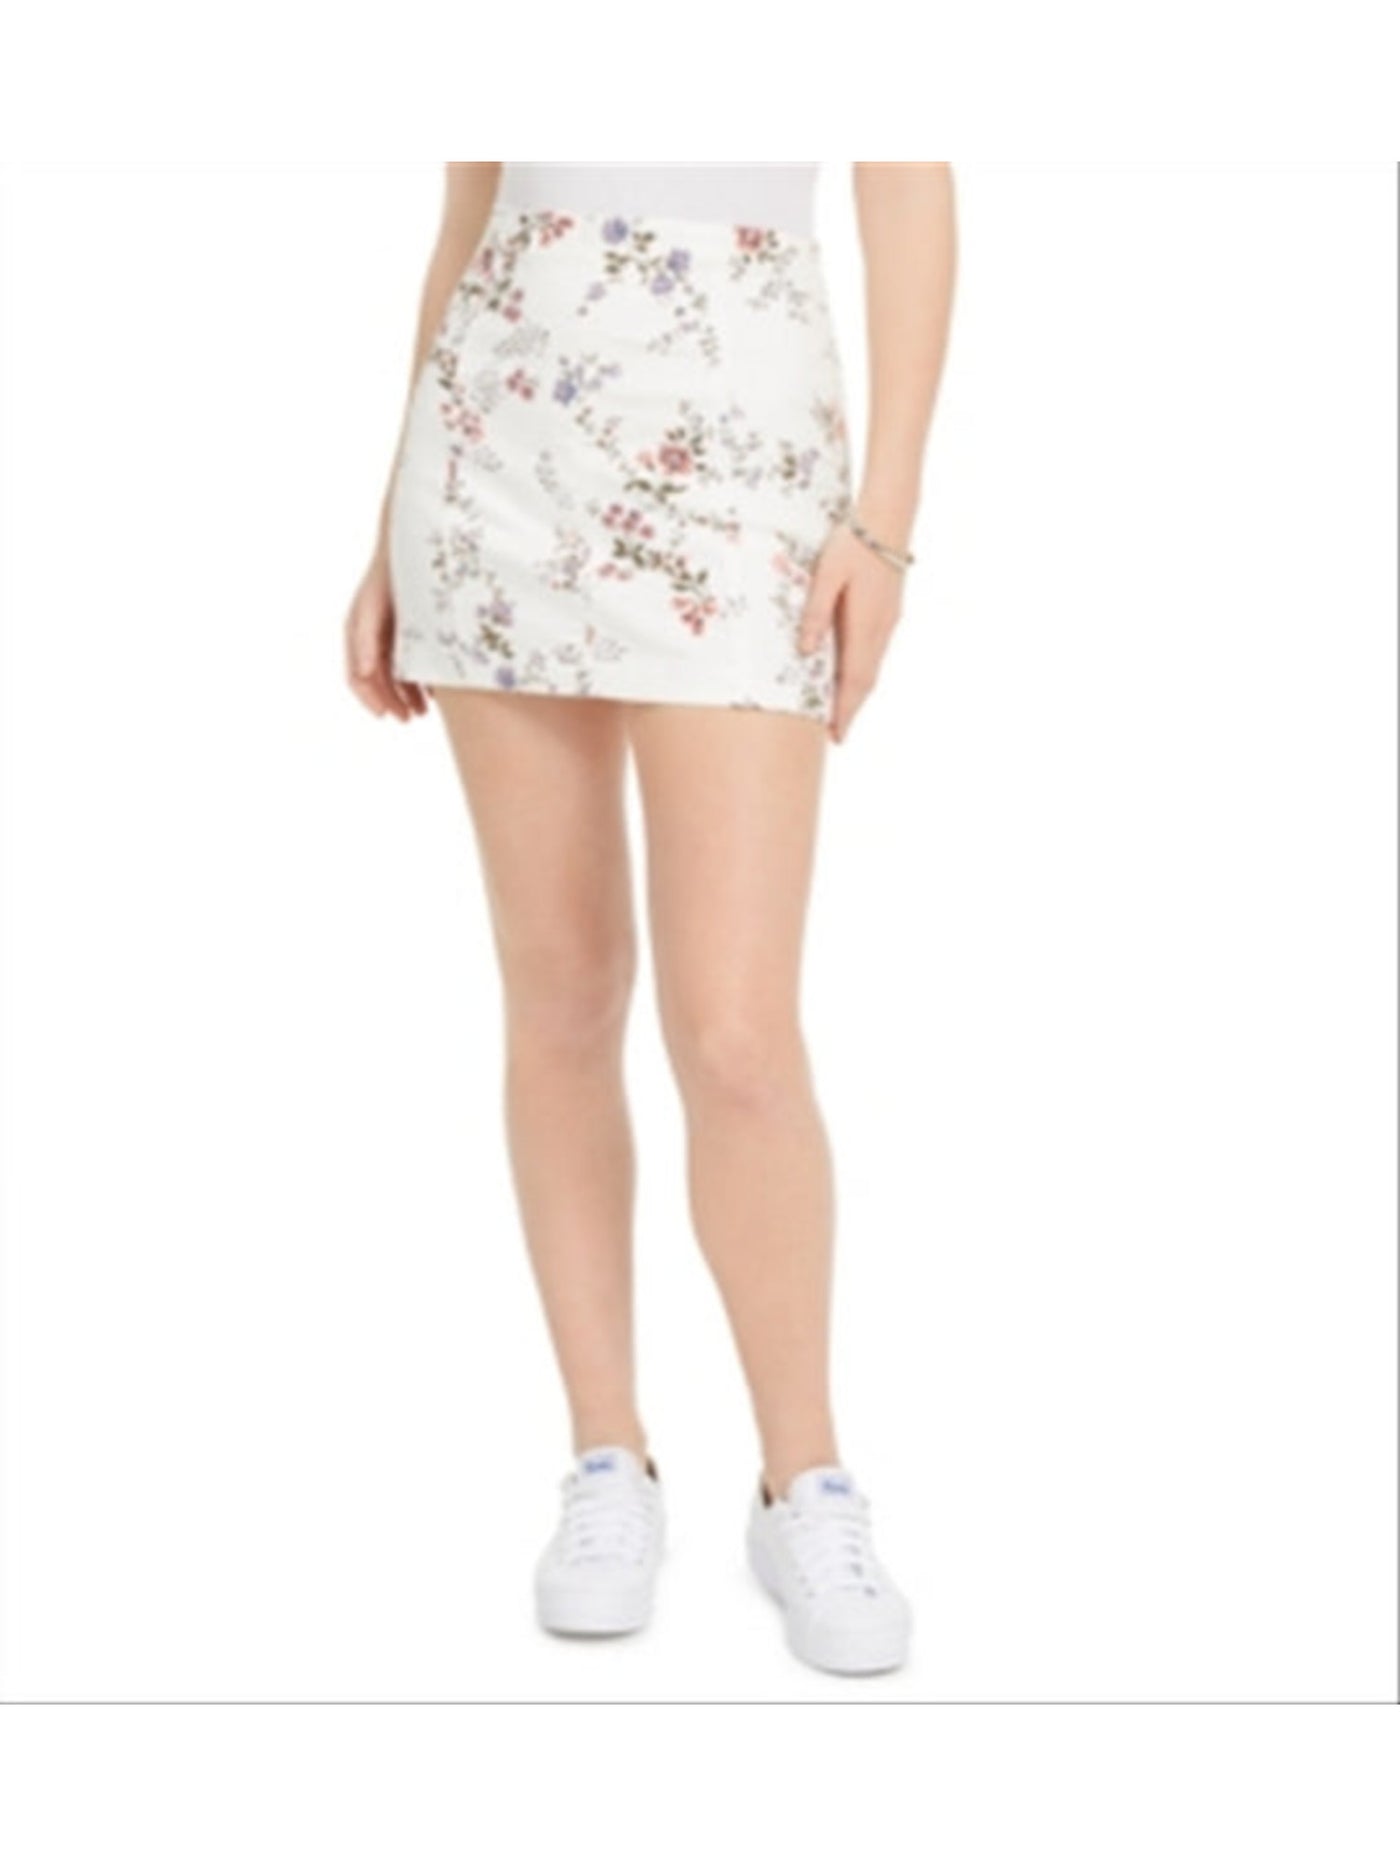 TINSELTOWN Womens White Denim Zippered Stretch Floral Short Party A-Line Skirt Juniors 15\32